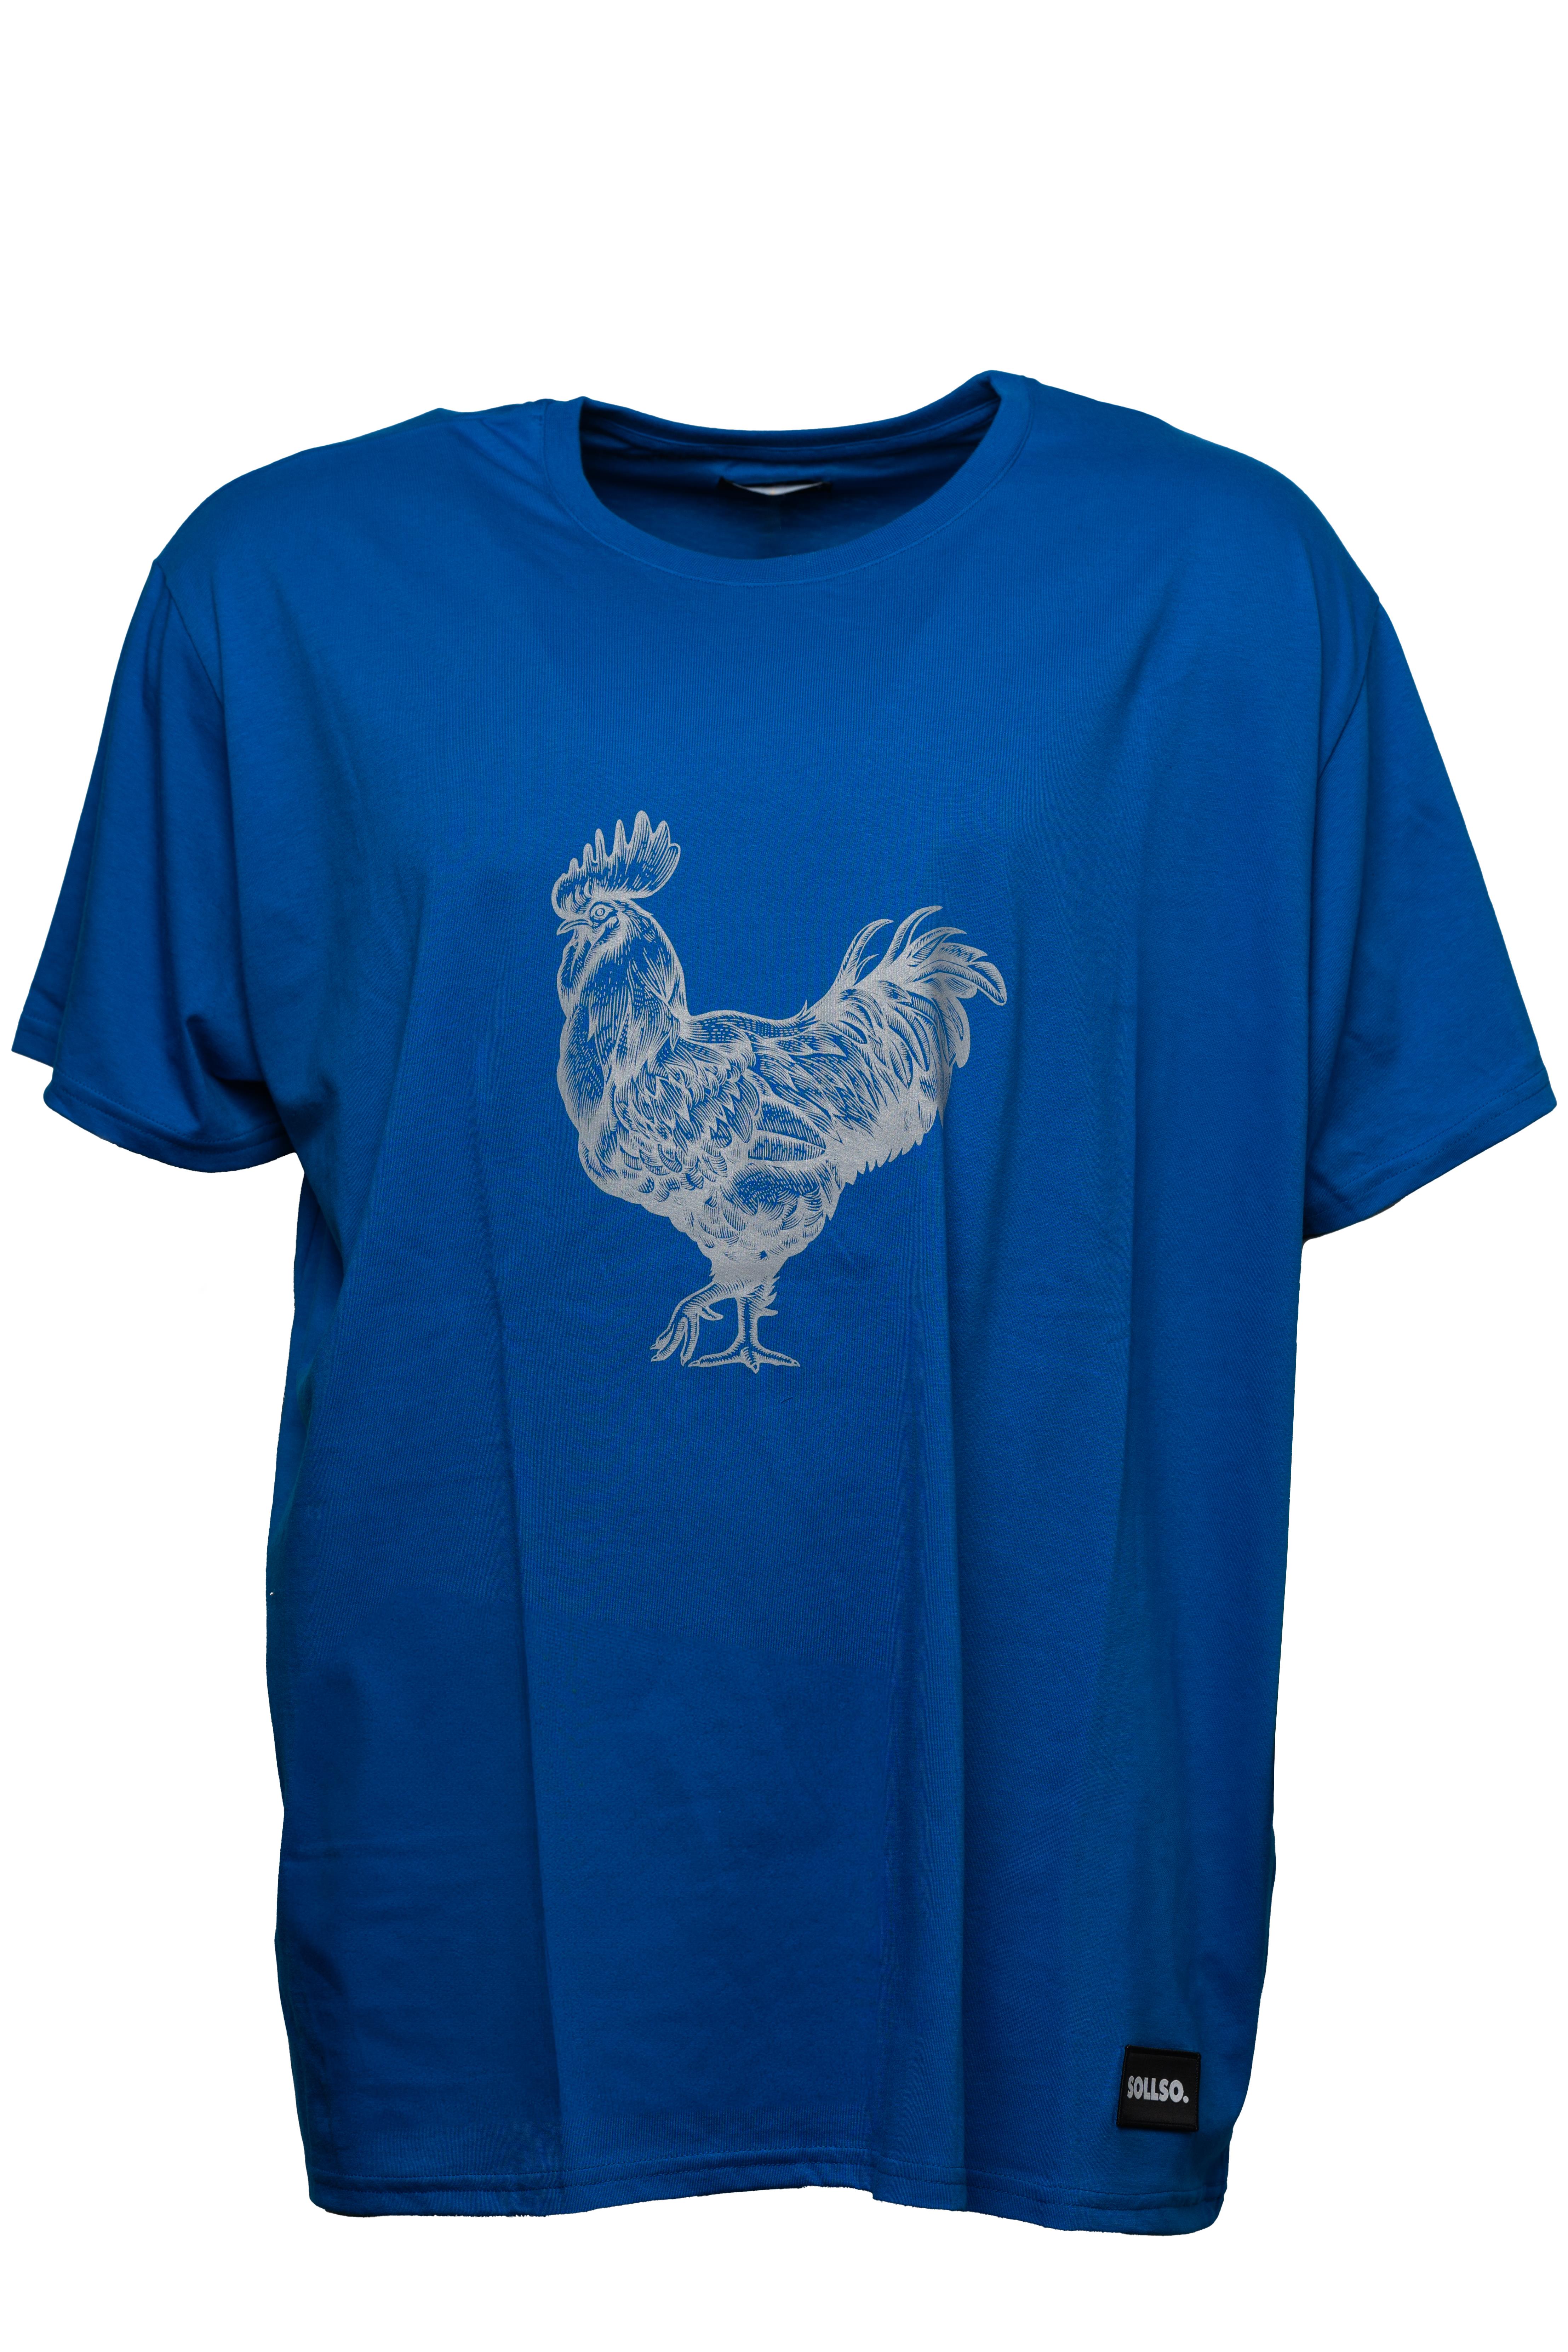 SOLLSO. T-Shirt "Rooster", Farbe Ocean Blue, Größe M